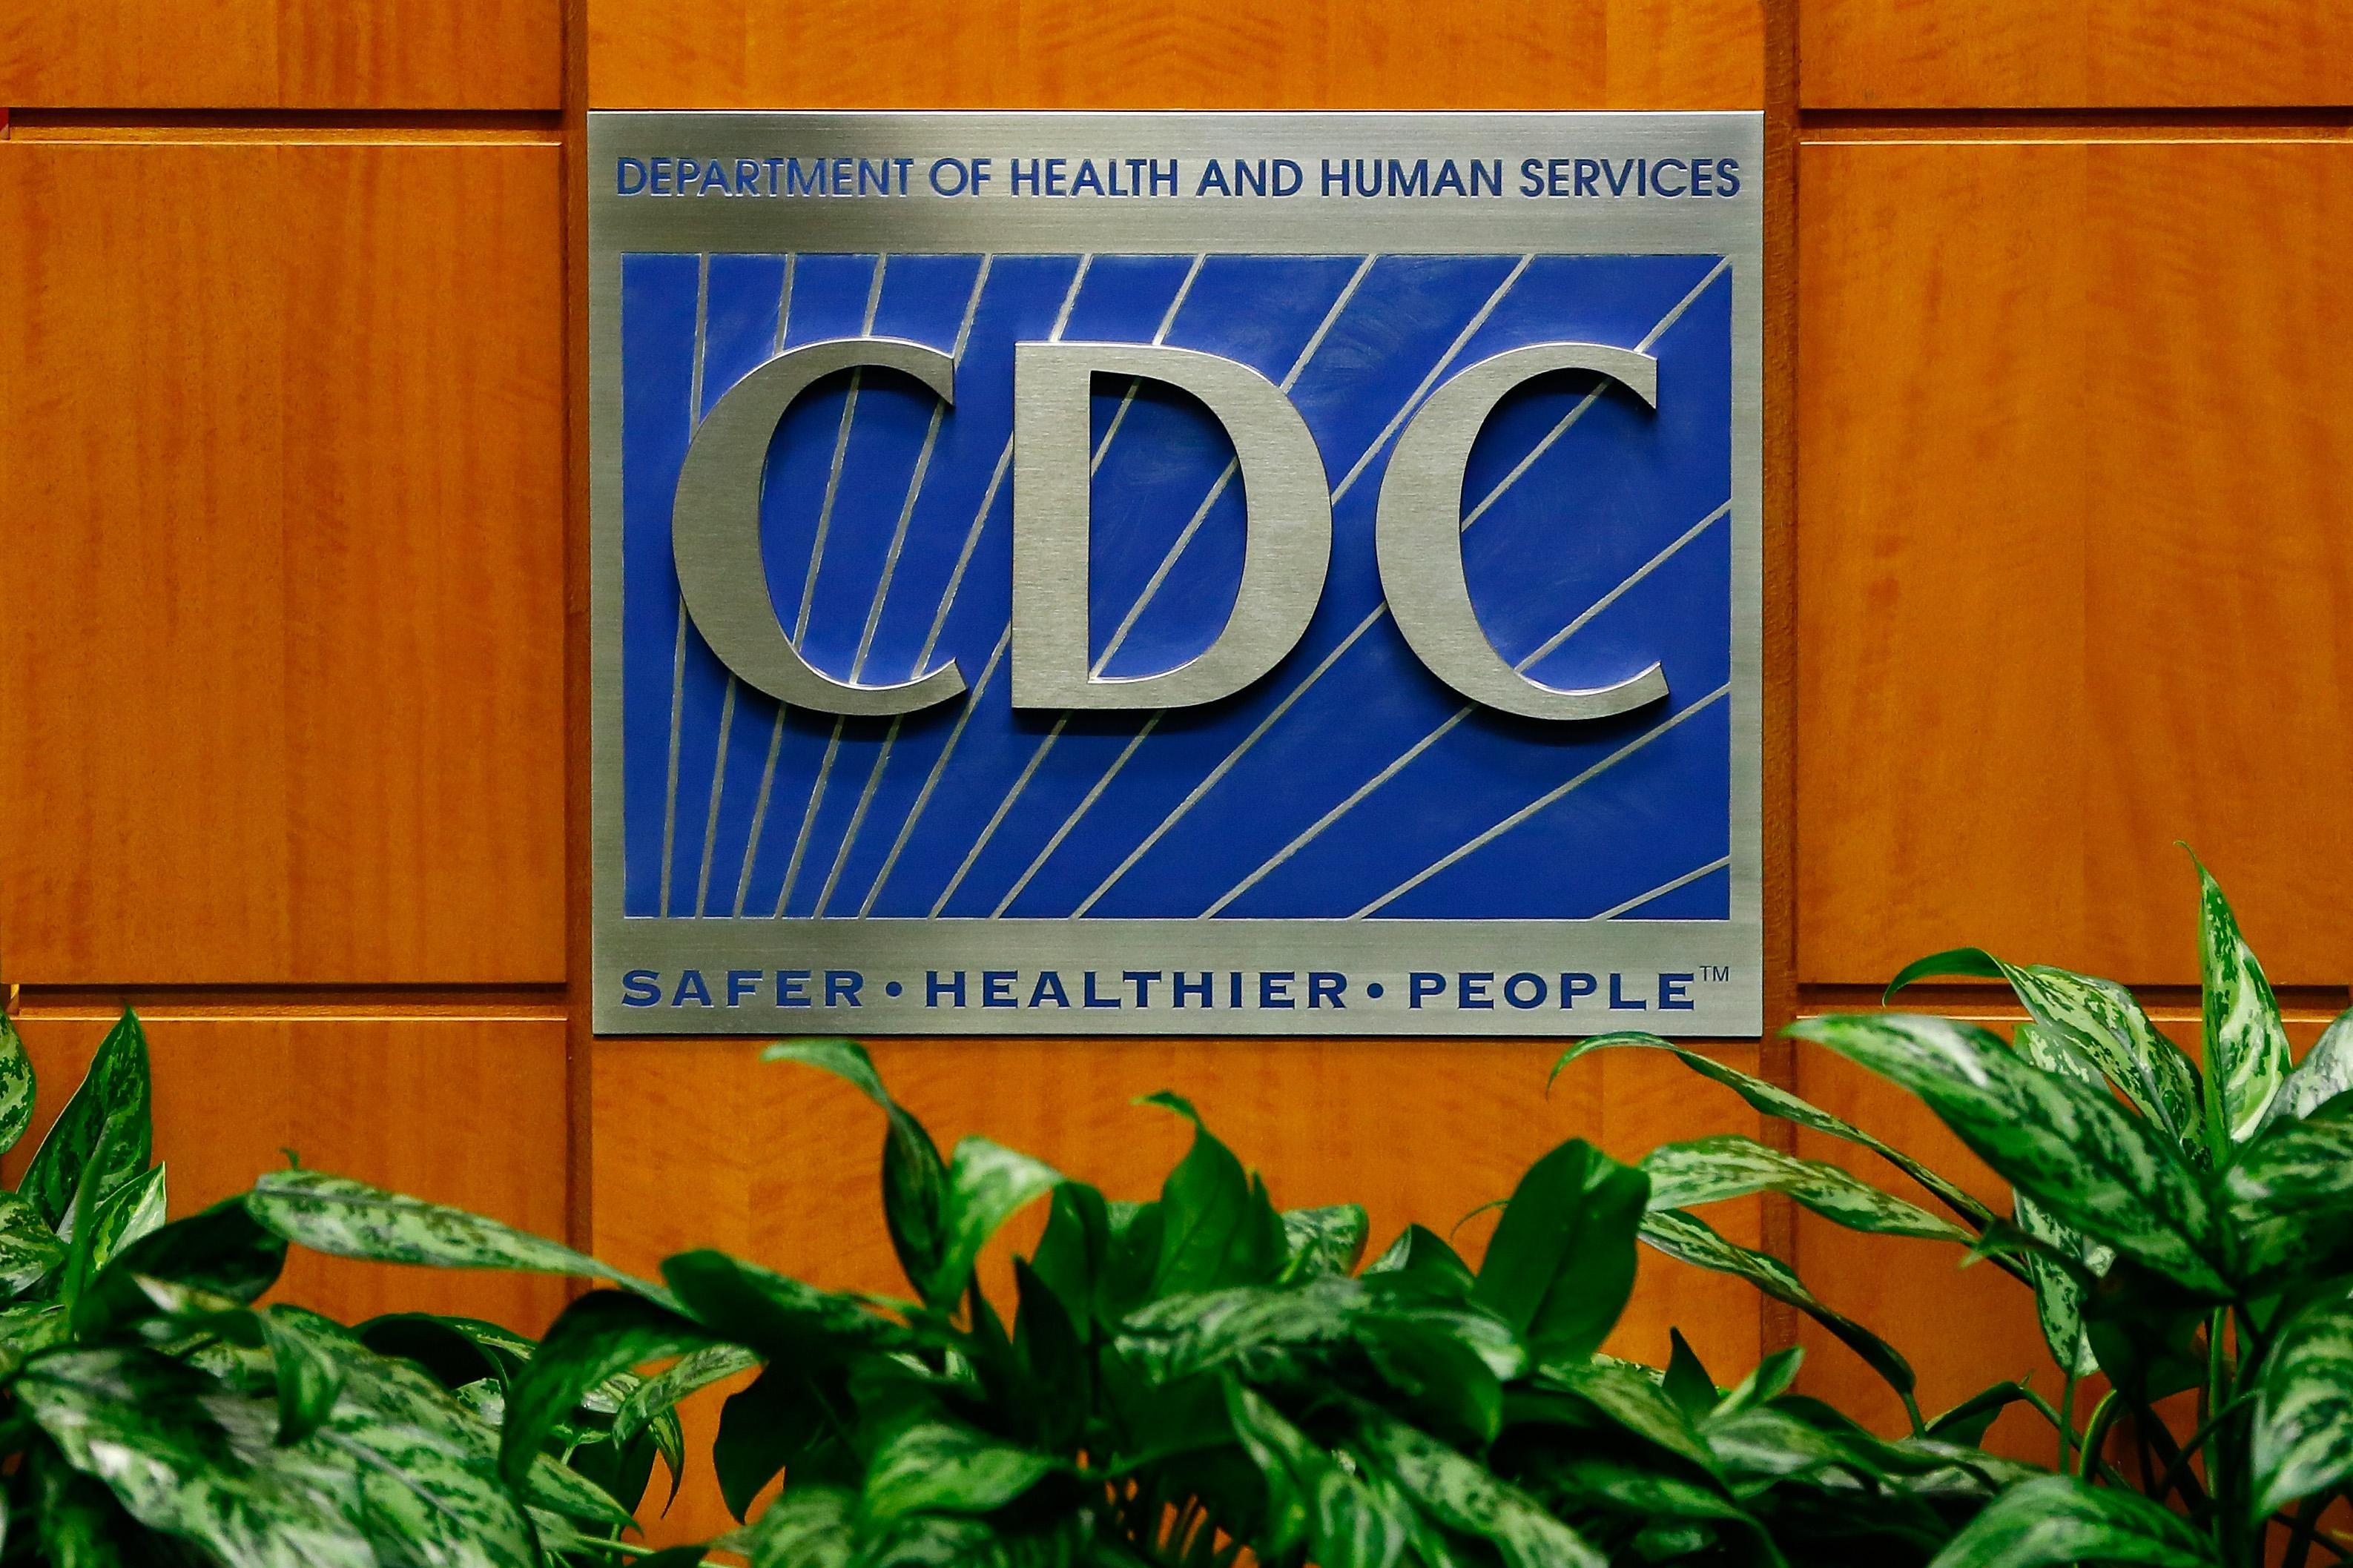 The CDC logo on a podium